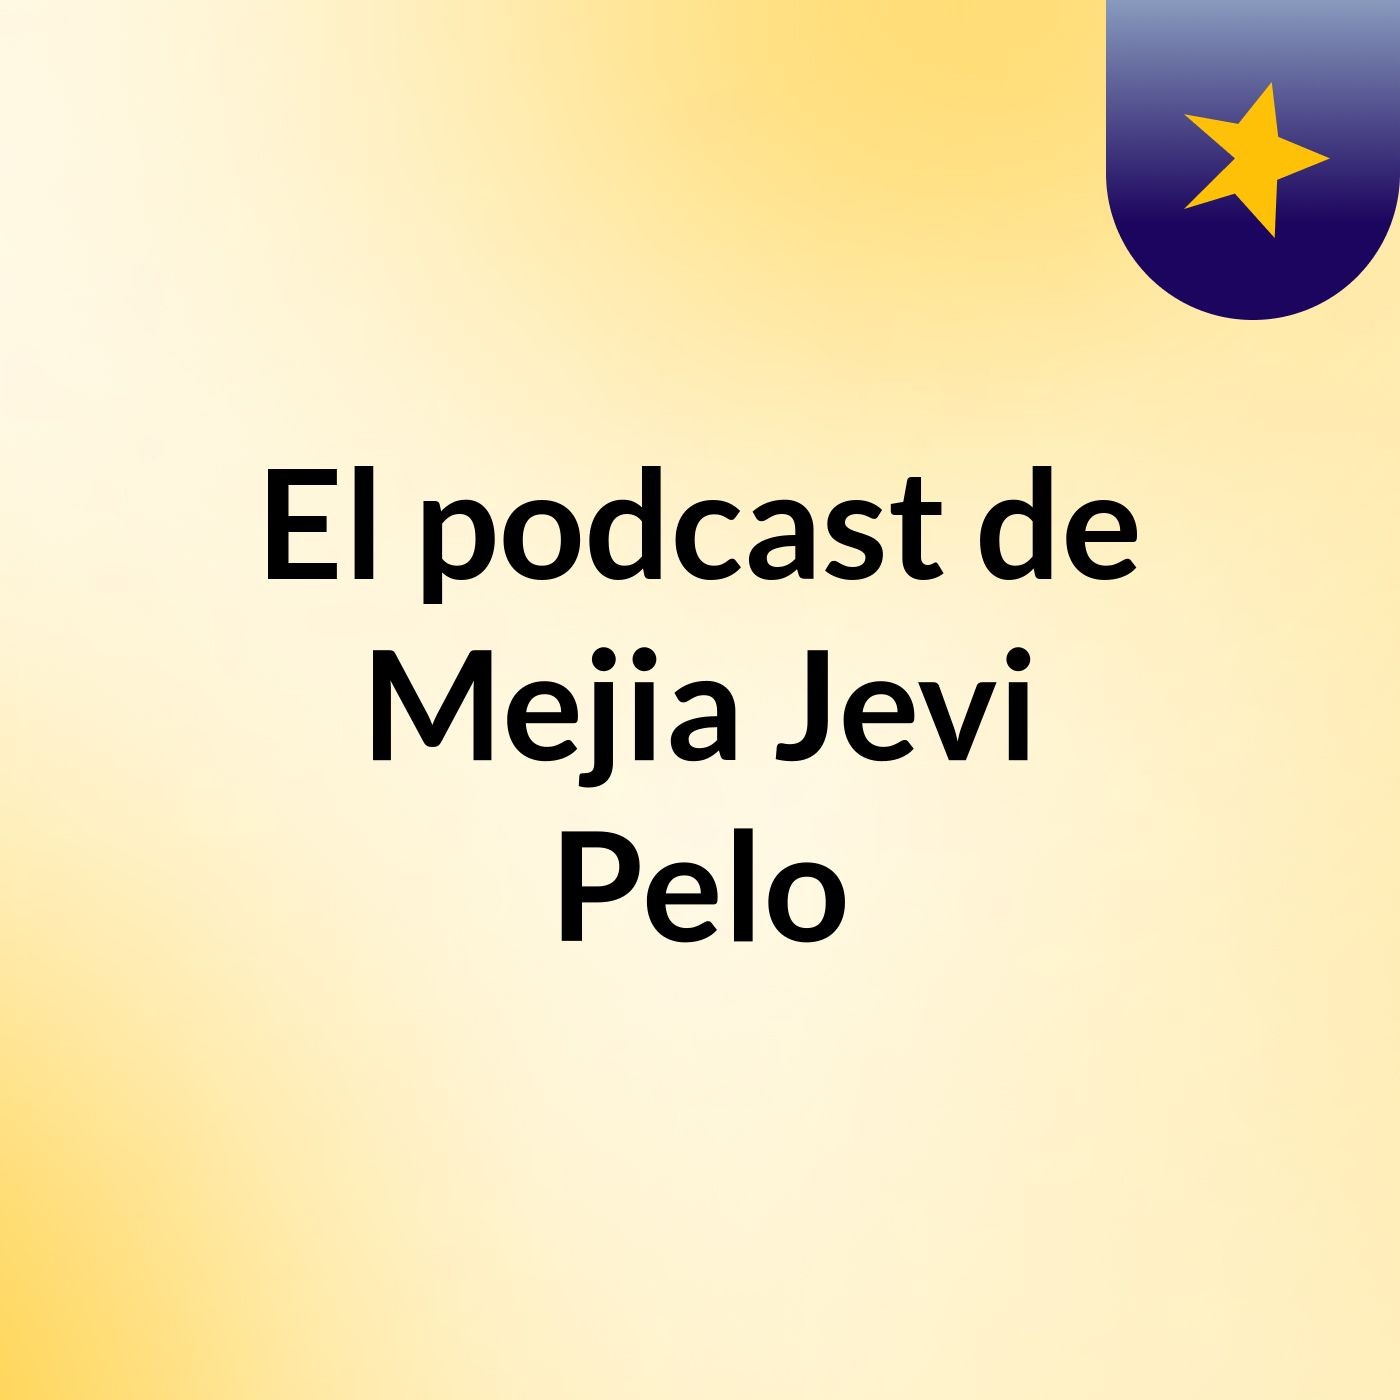 Episodio 4 - El podcast de Mejia Jevi Pelo